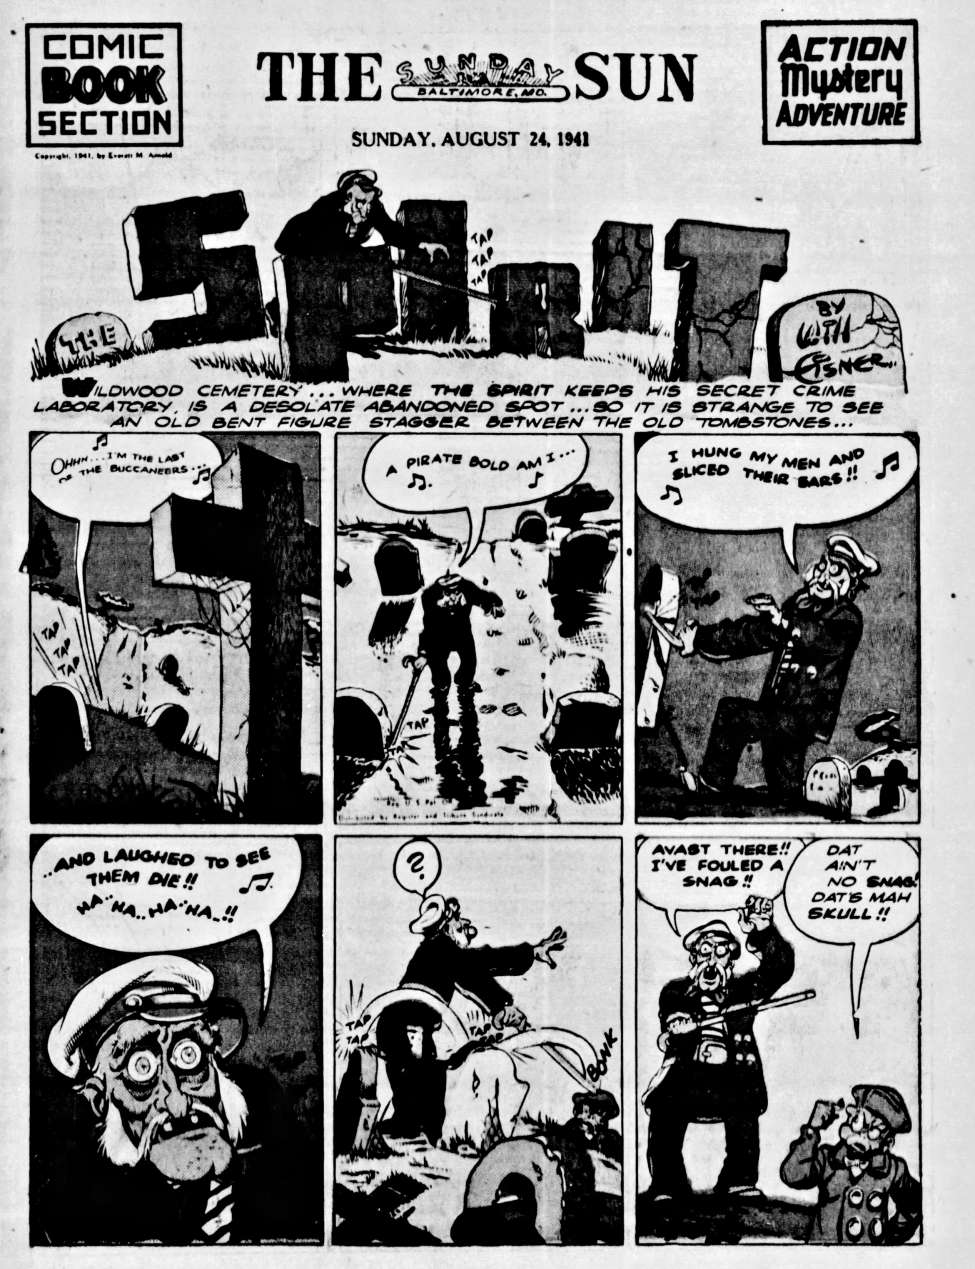 Book Cover For The Spirit (1941-08-24) - Baltimore Sun (b/w)